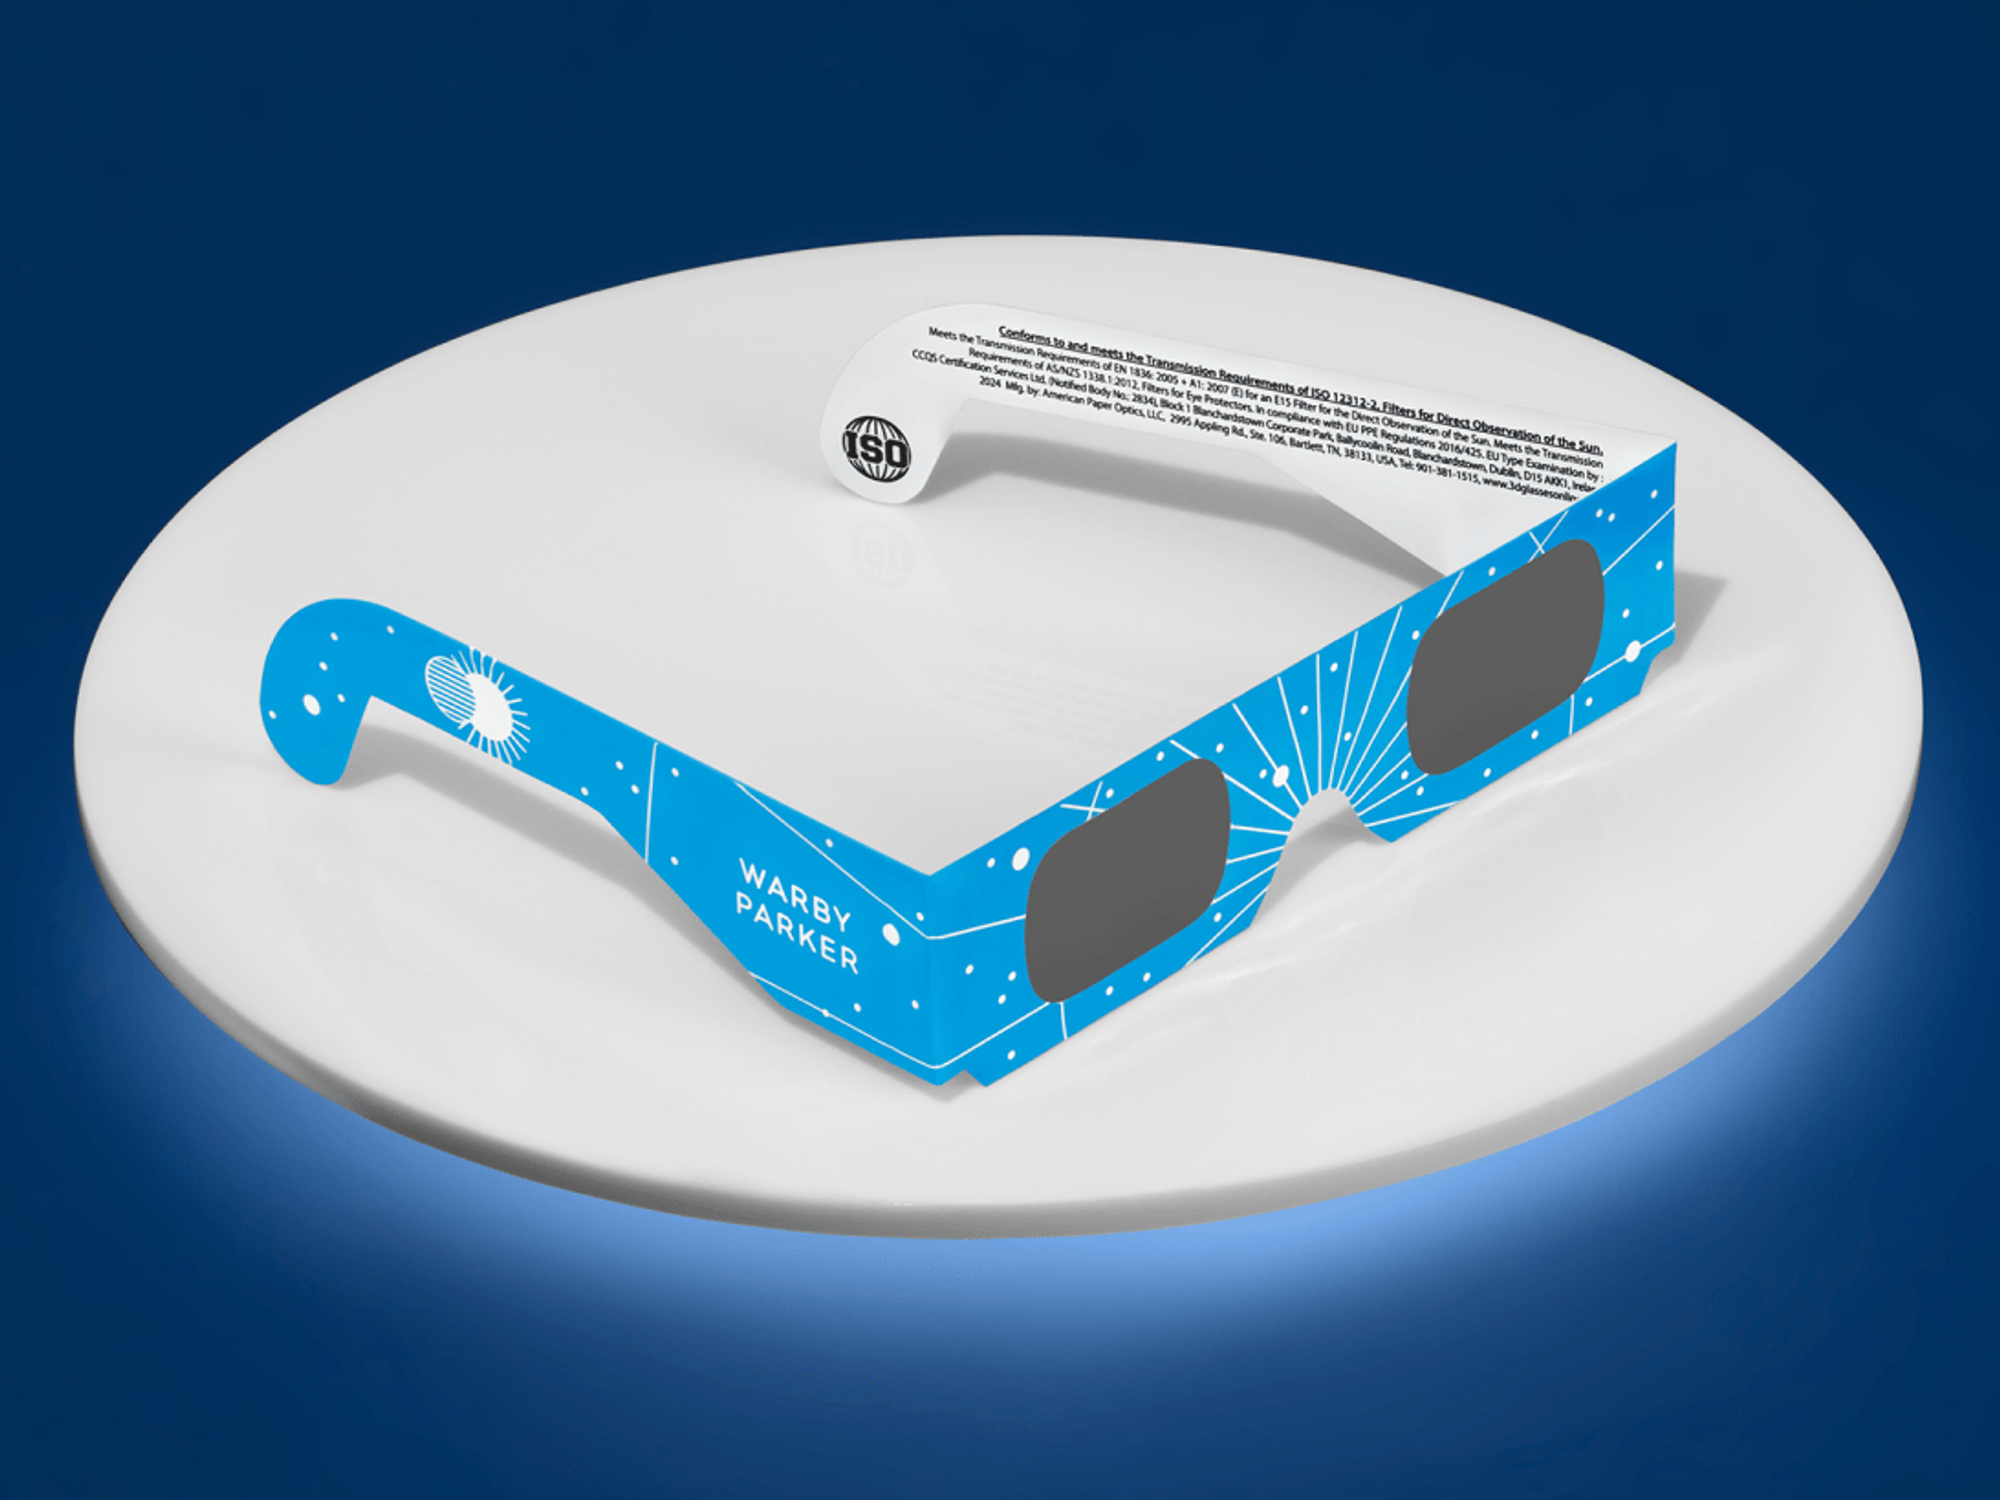 Warby Parker eclipse glasses